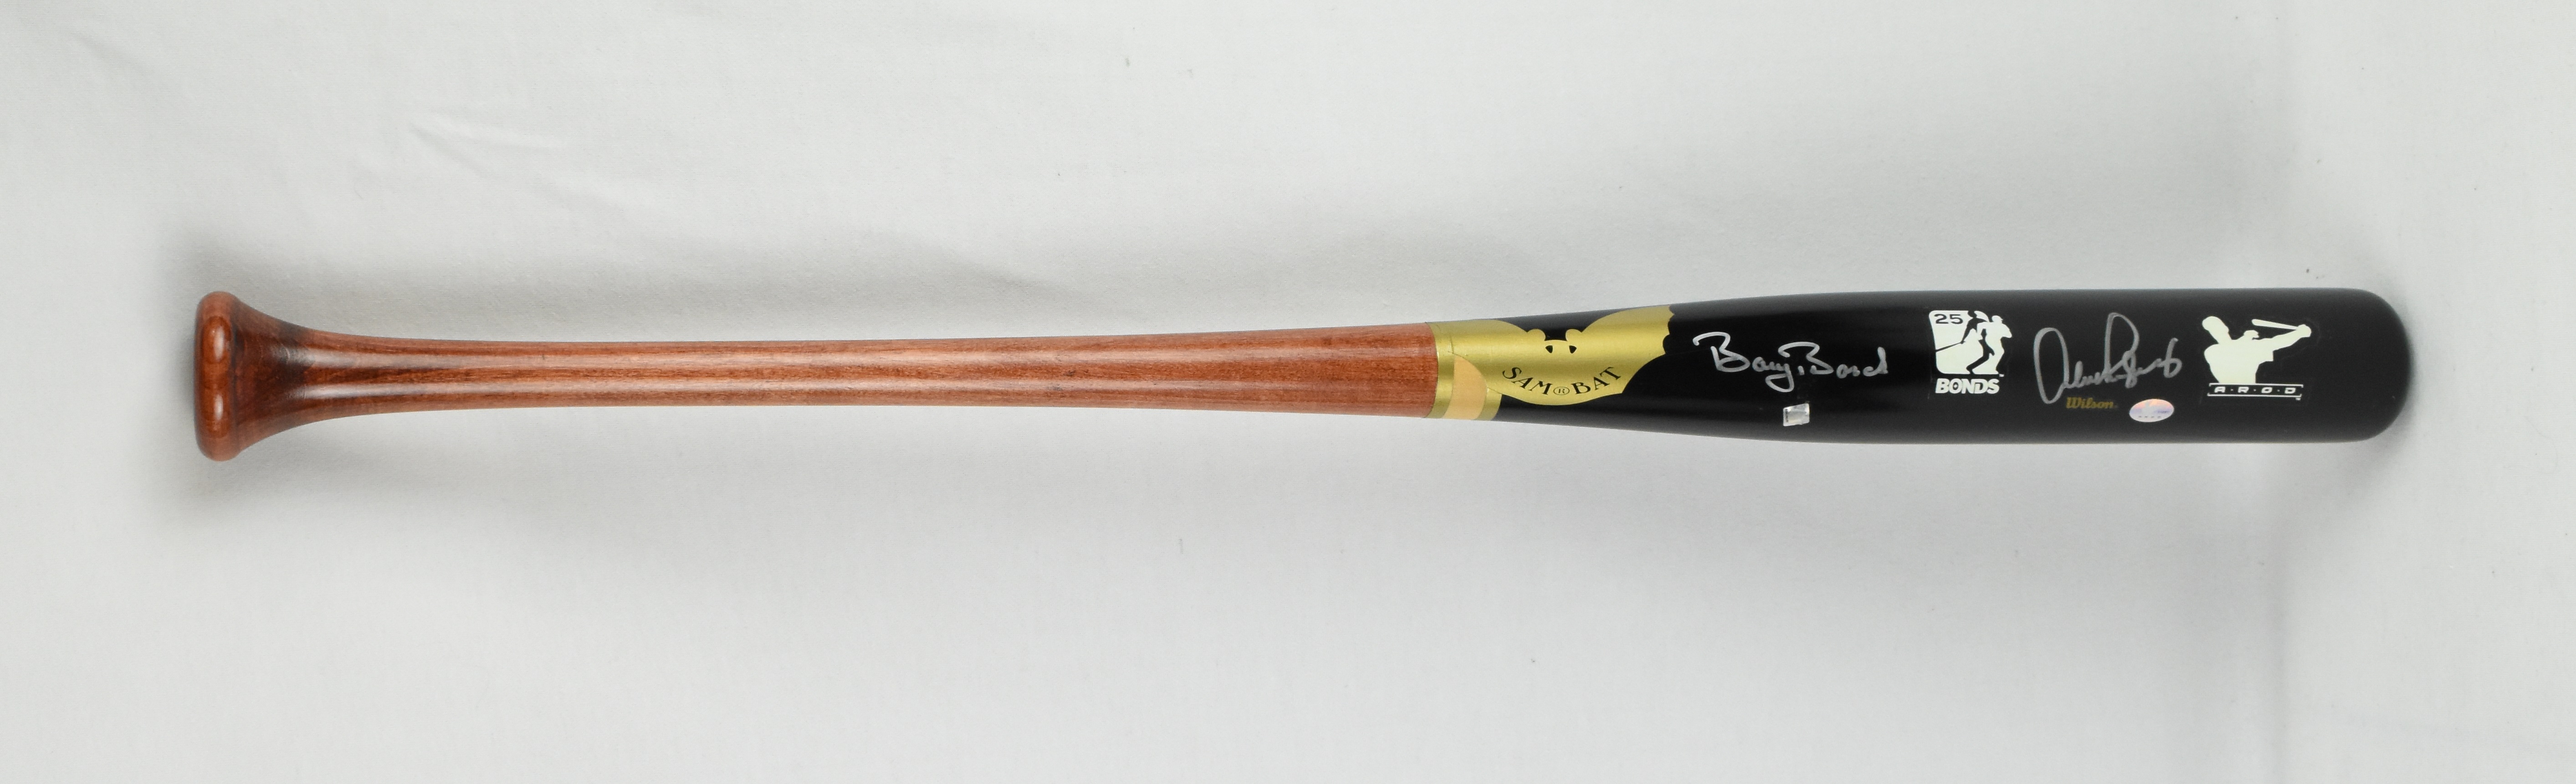 Sold at Auction: Barry Bonds Autographed Baseball Bat